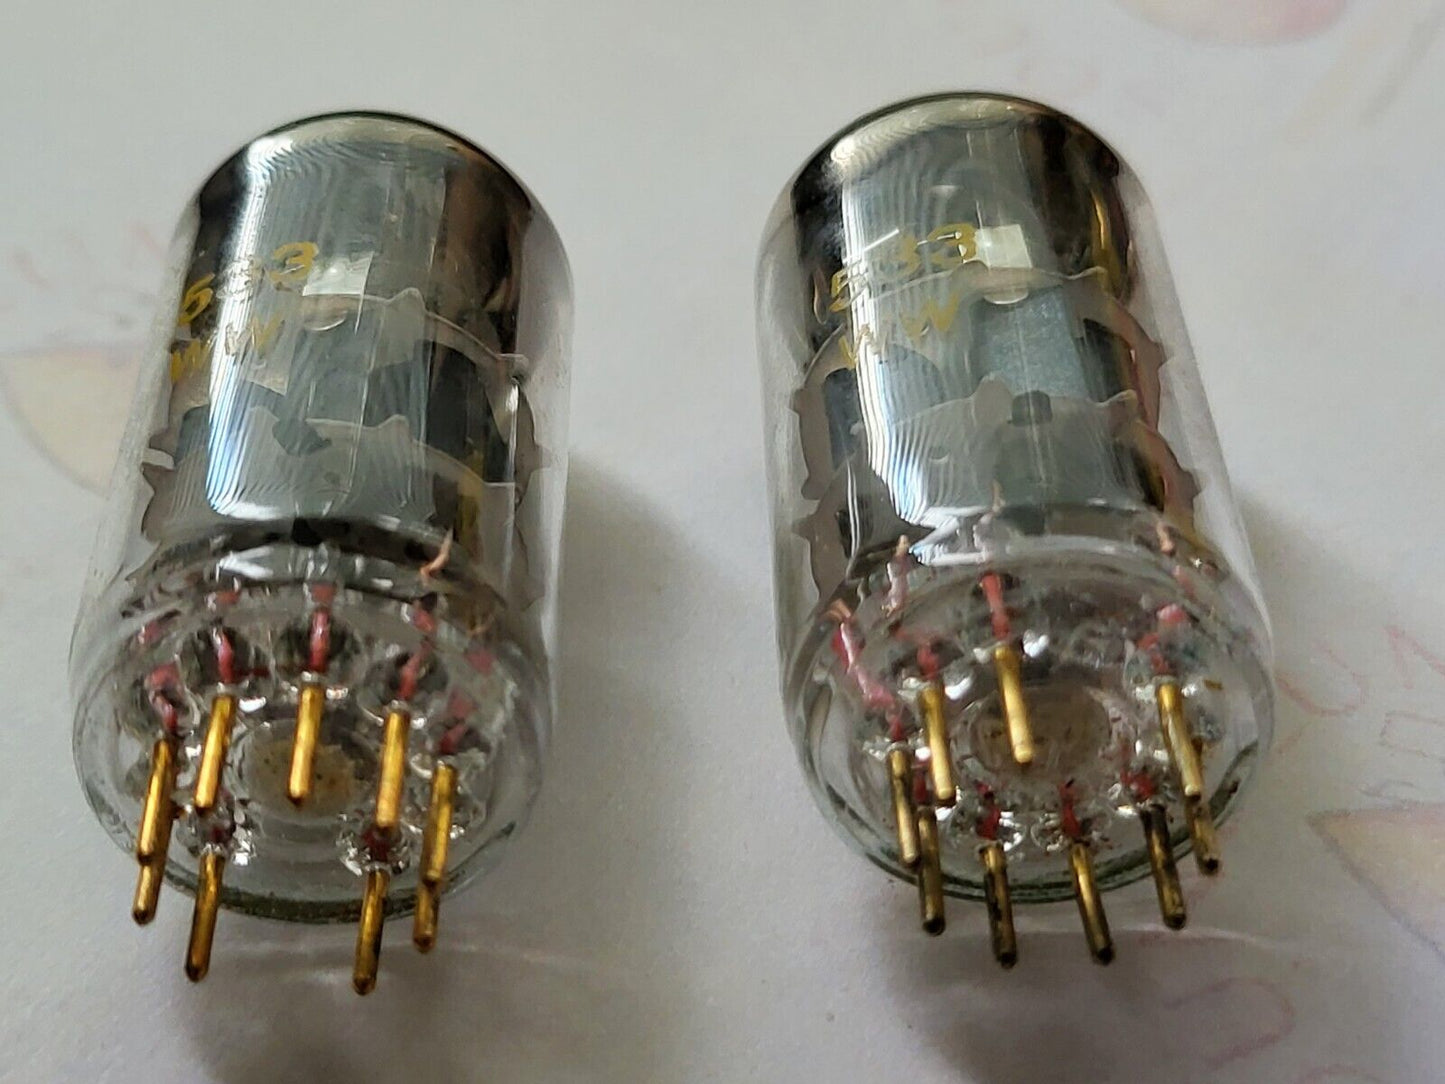 Tesla E88CC 6922 Audio Tubes Gold Pins Matched Pair - Czechoslovakia 1971 - NOS